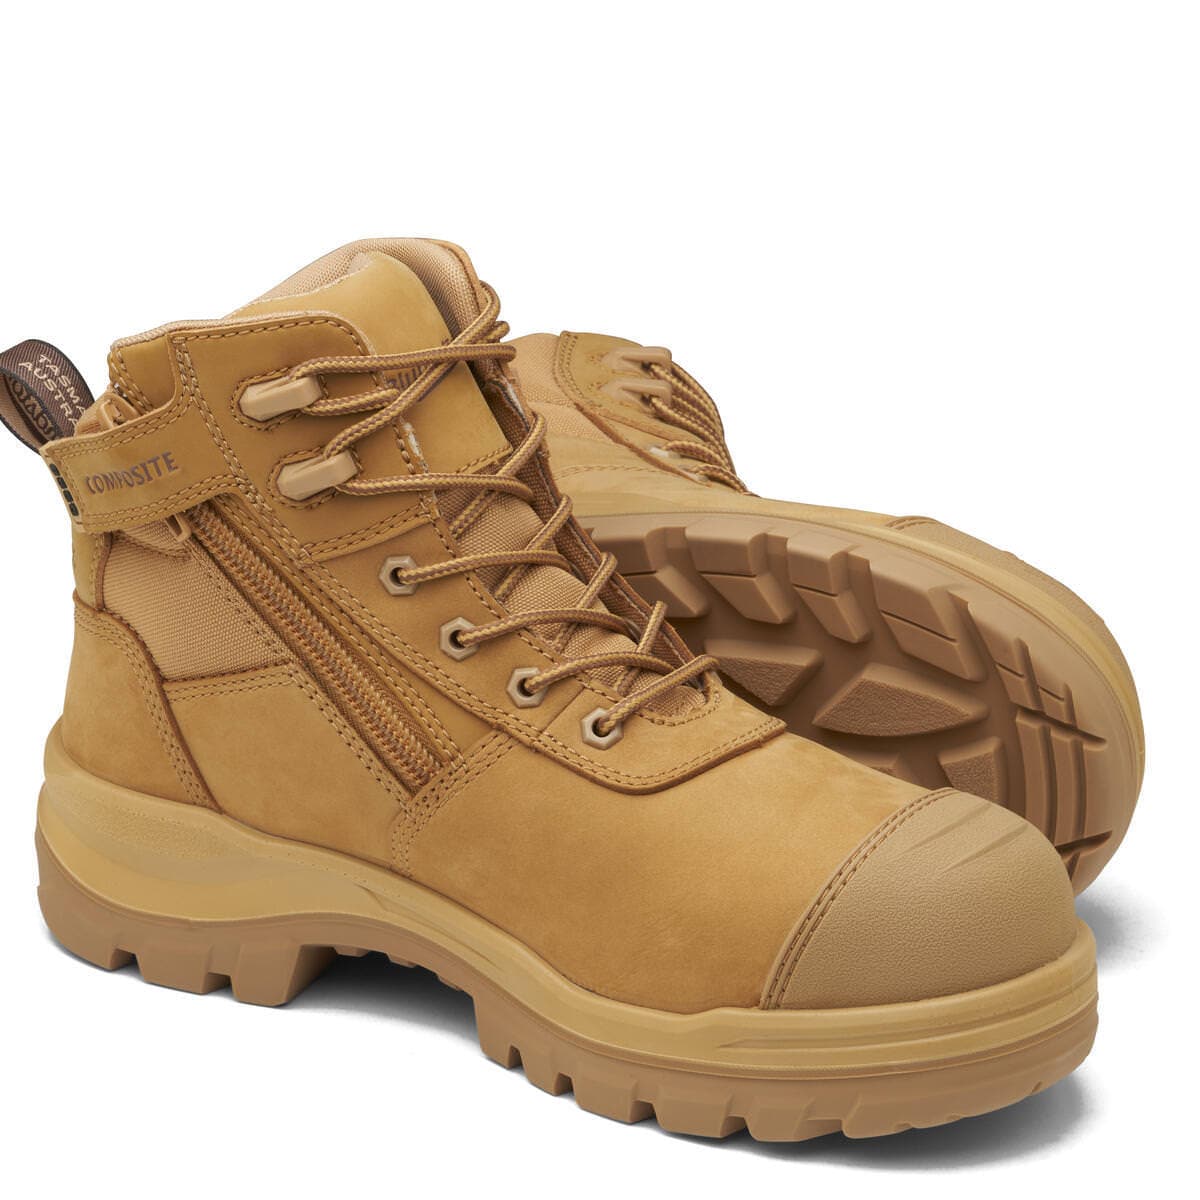 Blundstone Unisex Rotoflex Safety Boots - Wheat #8550